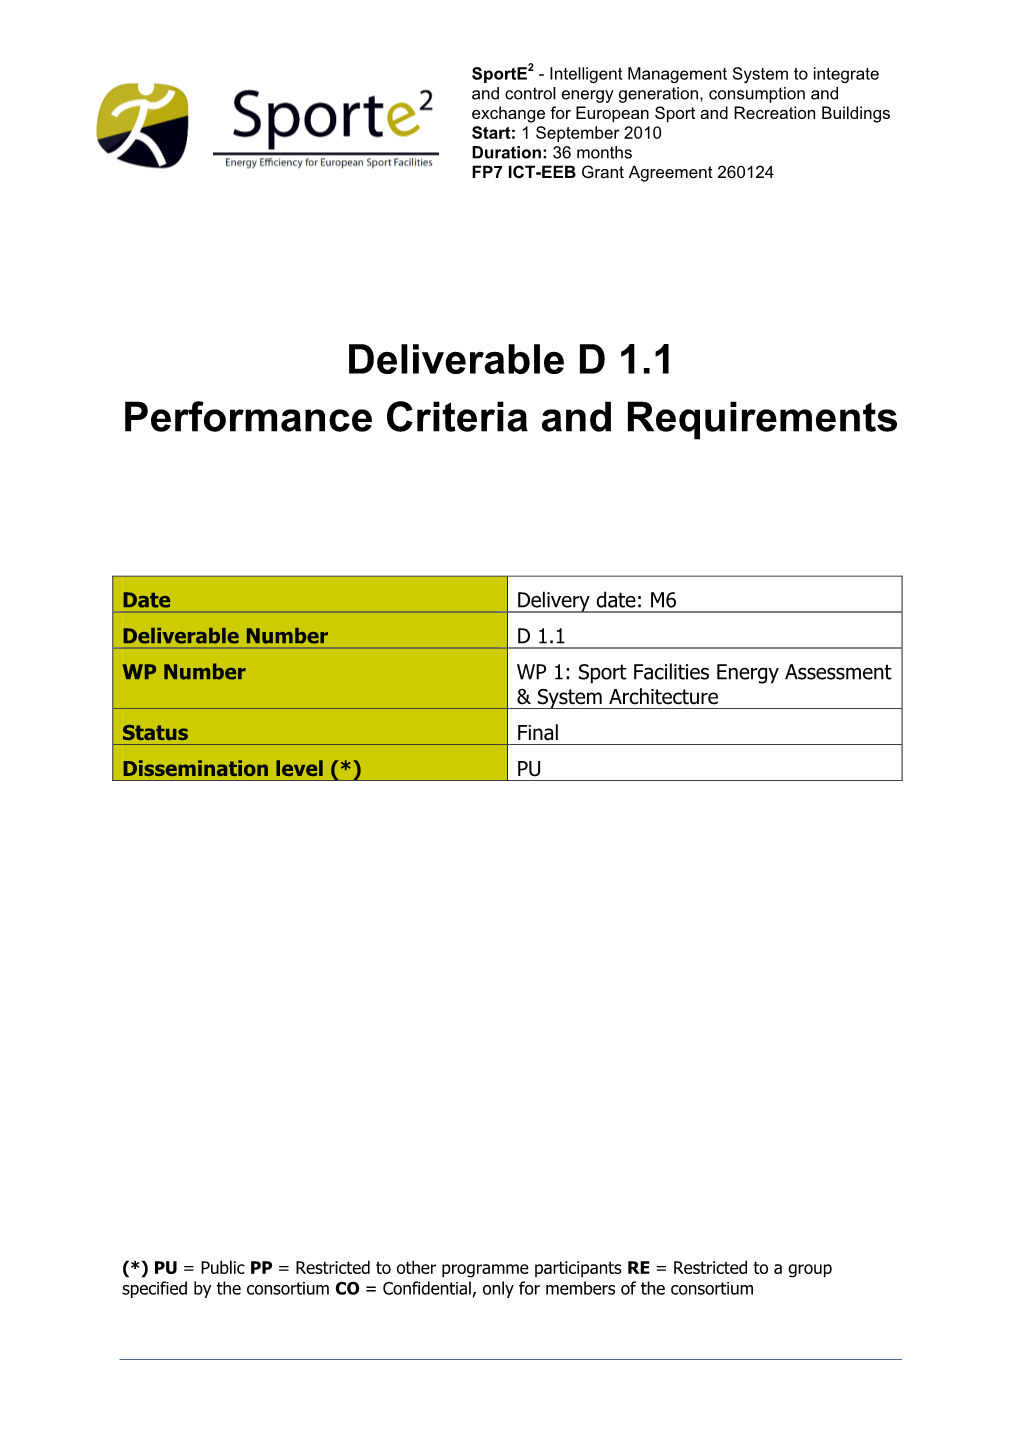 D1.1 Performance Criteria & Requirements